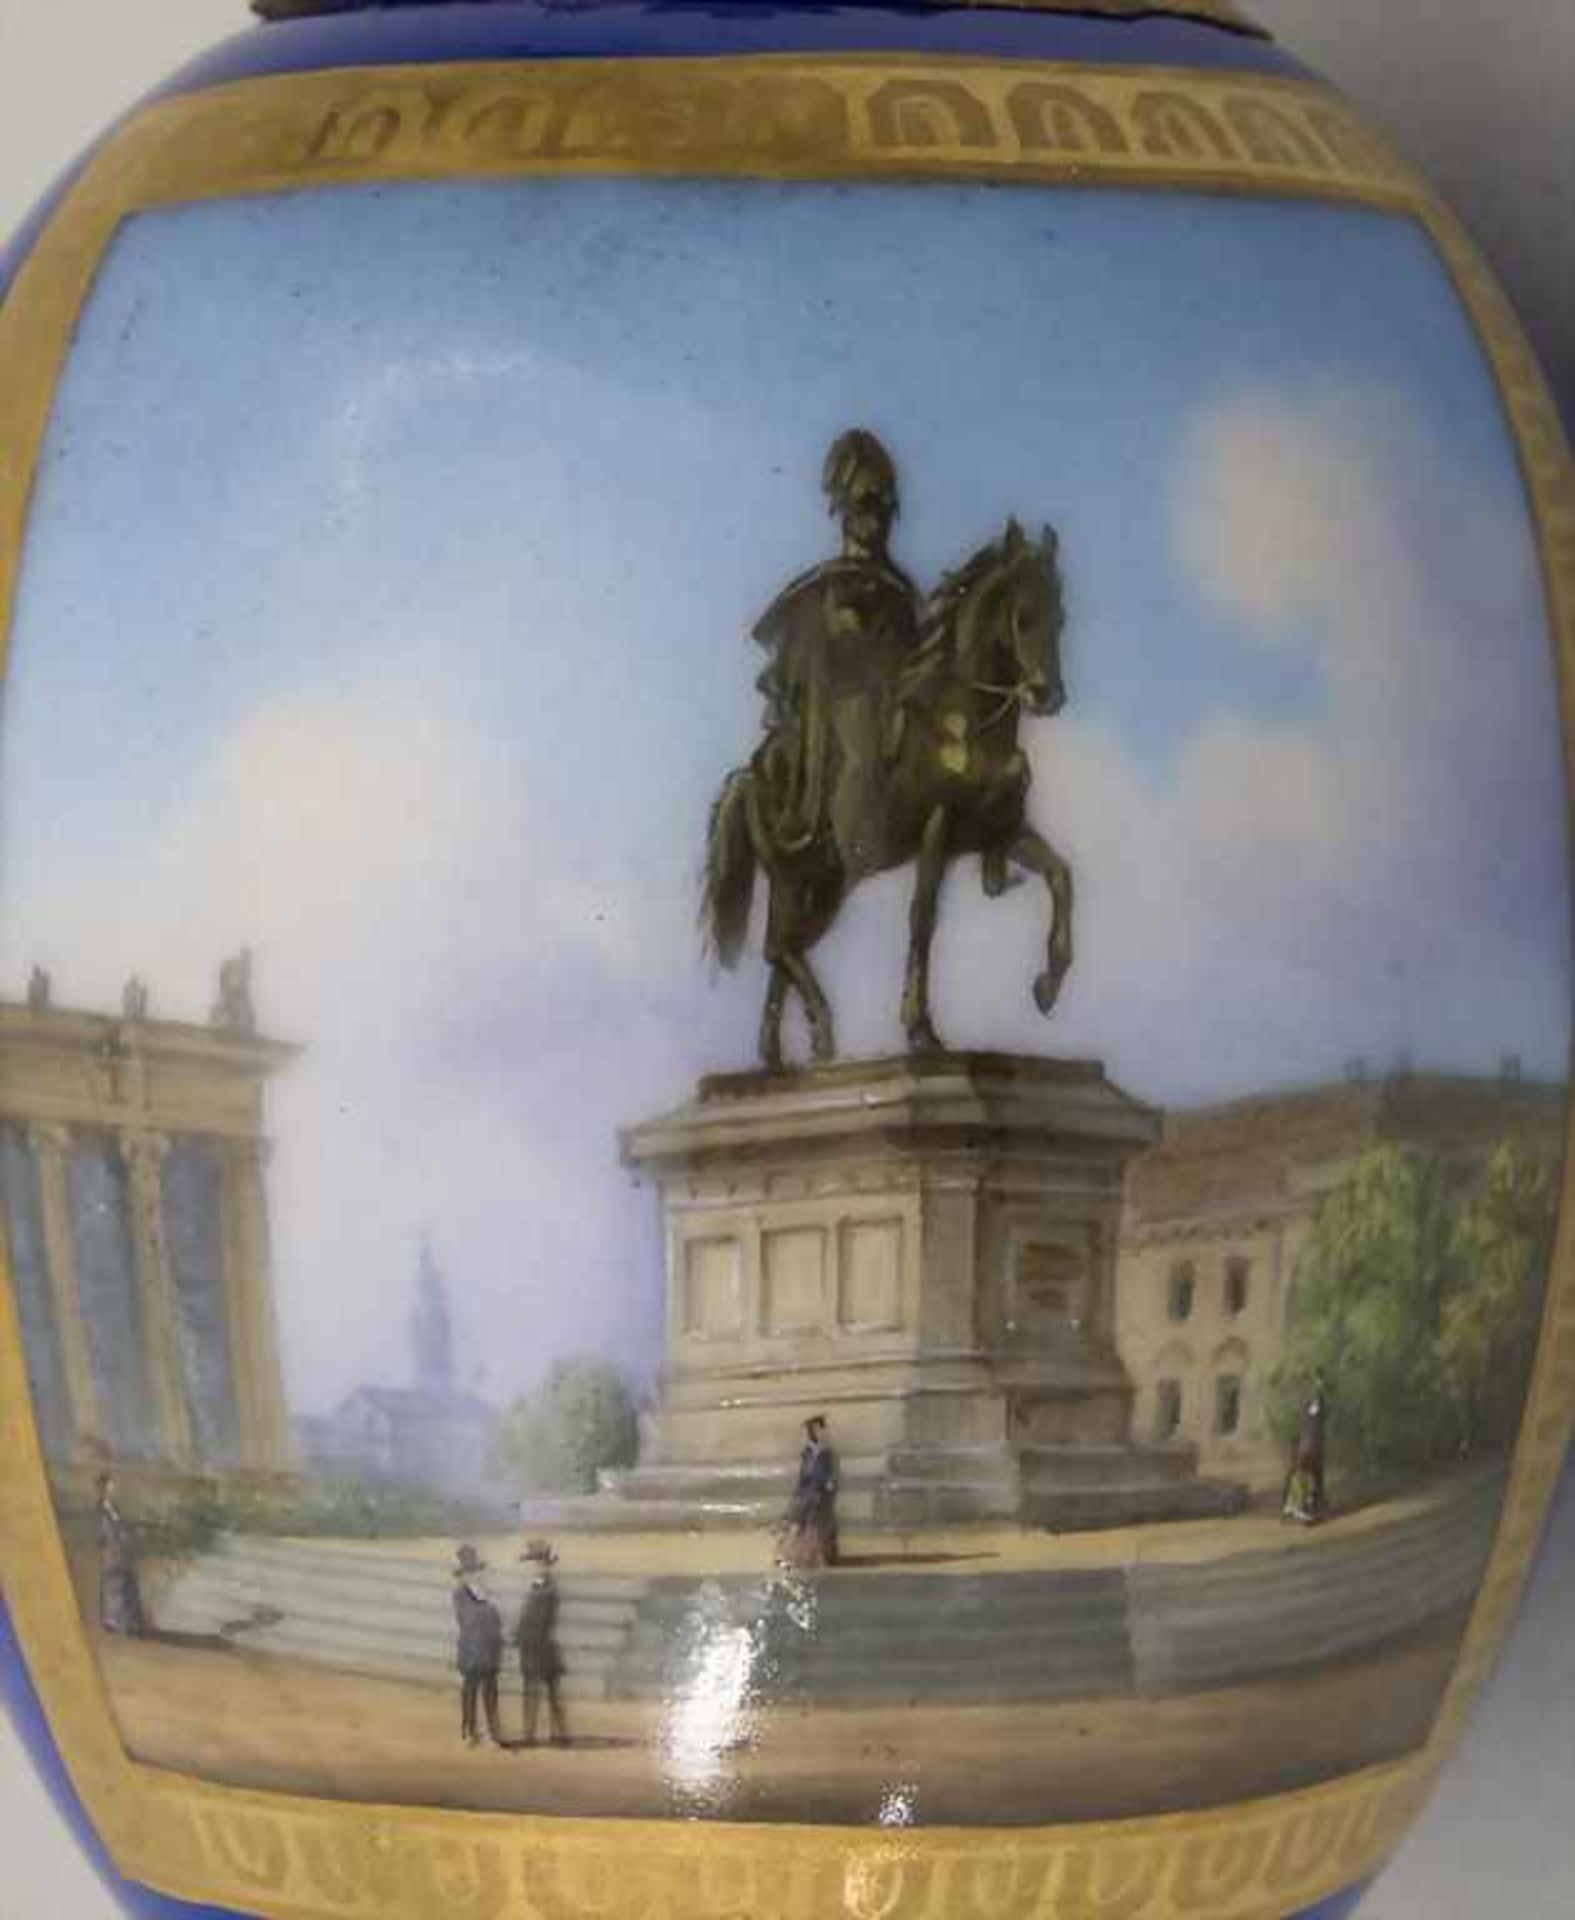 Porzellanei mit Reiterstandbild König Friedrich Wilhelm III / A porcelain egg with equestrian statue - Image 2 of 3